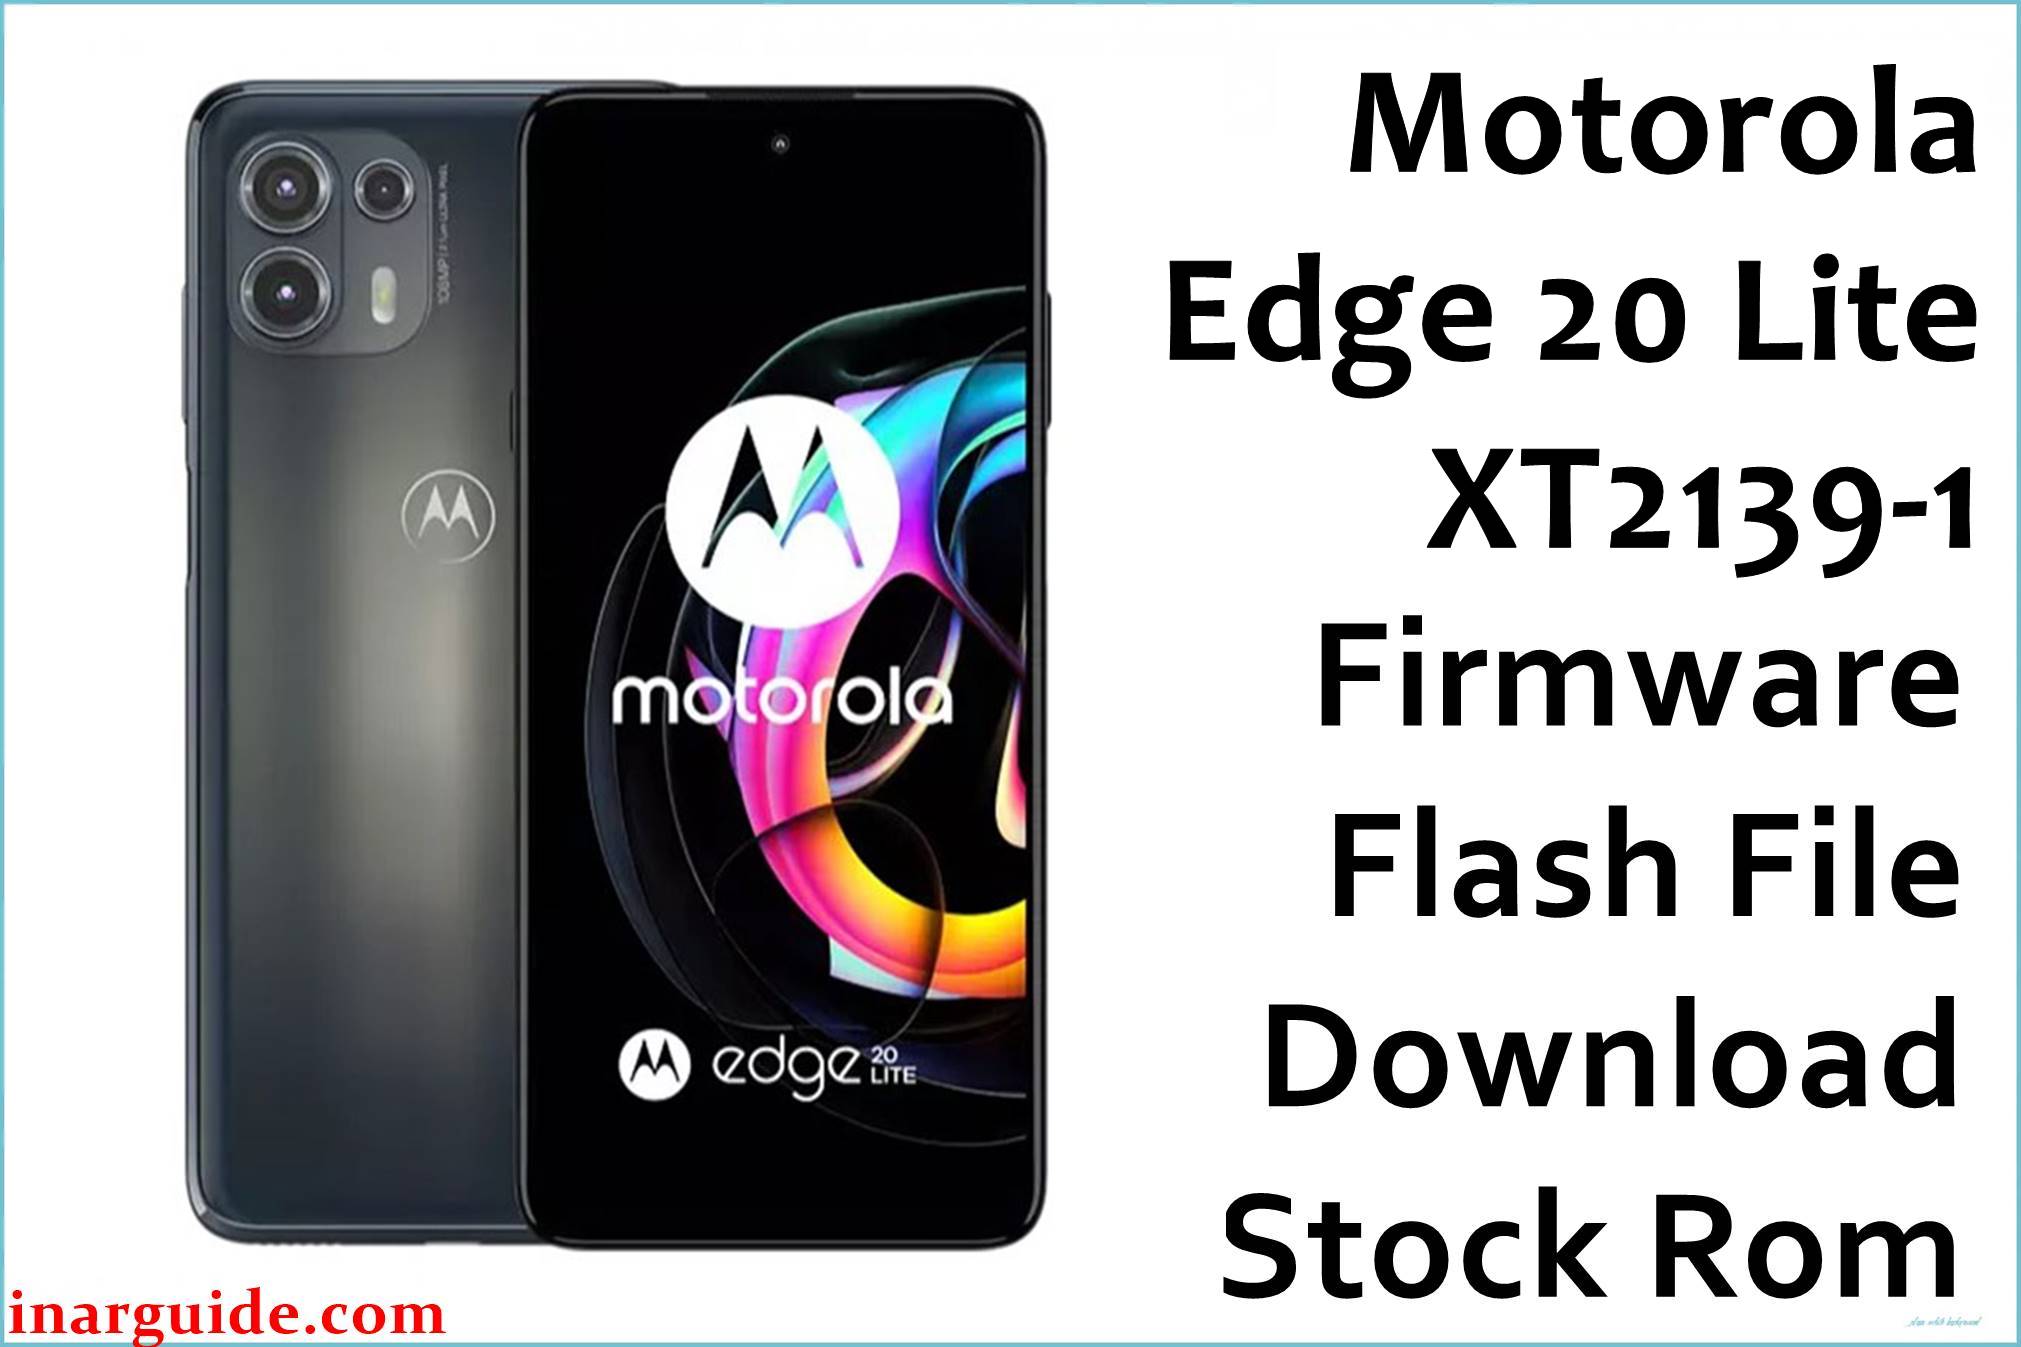 Motorola Edge 20 Lite XT2139-1